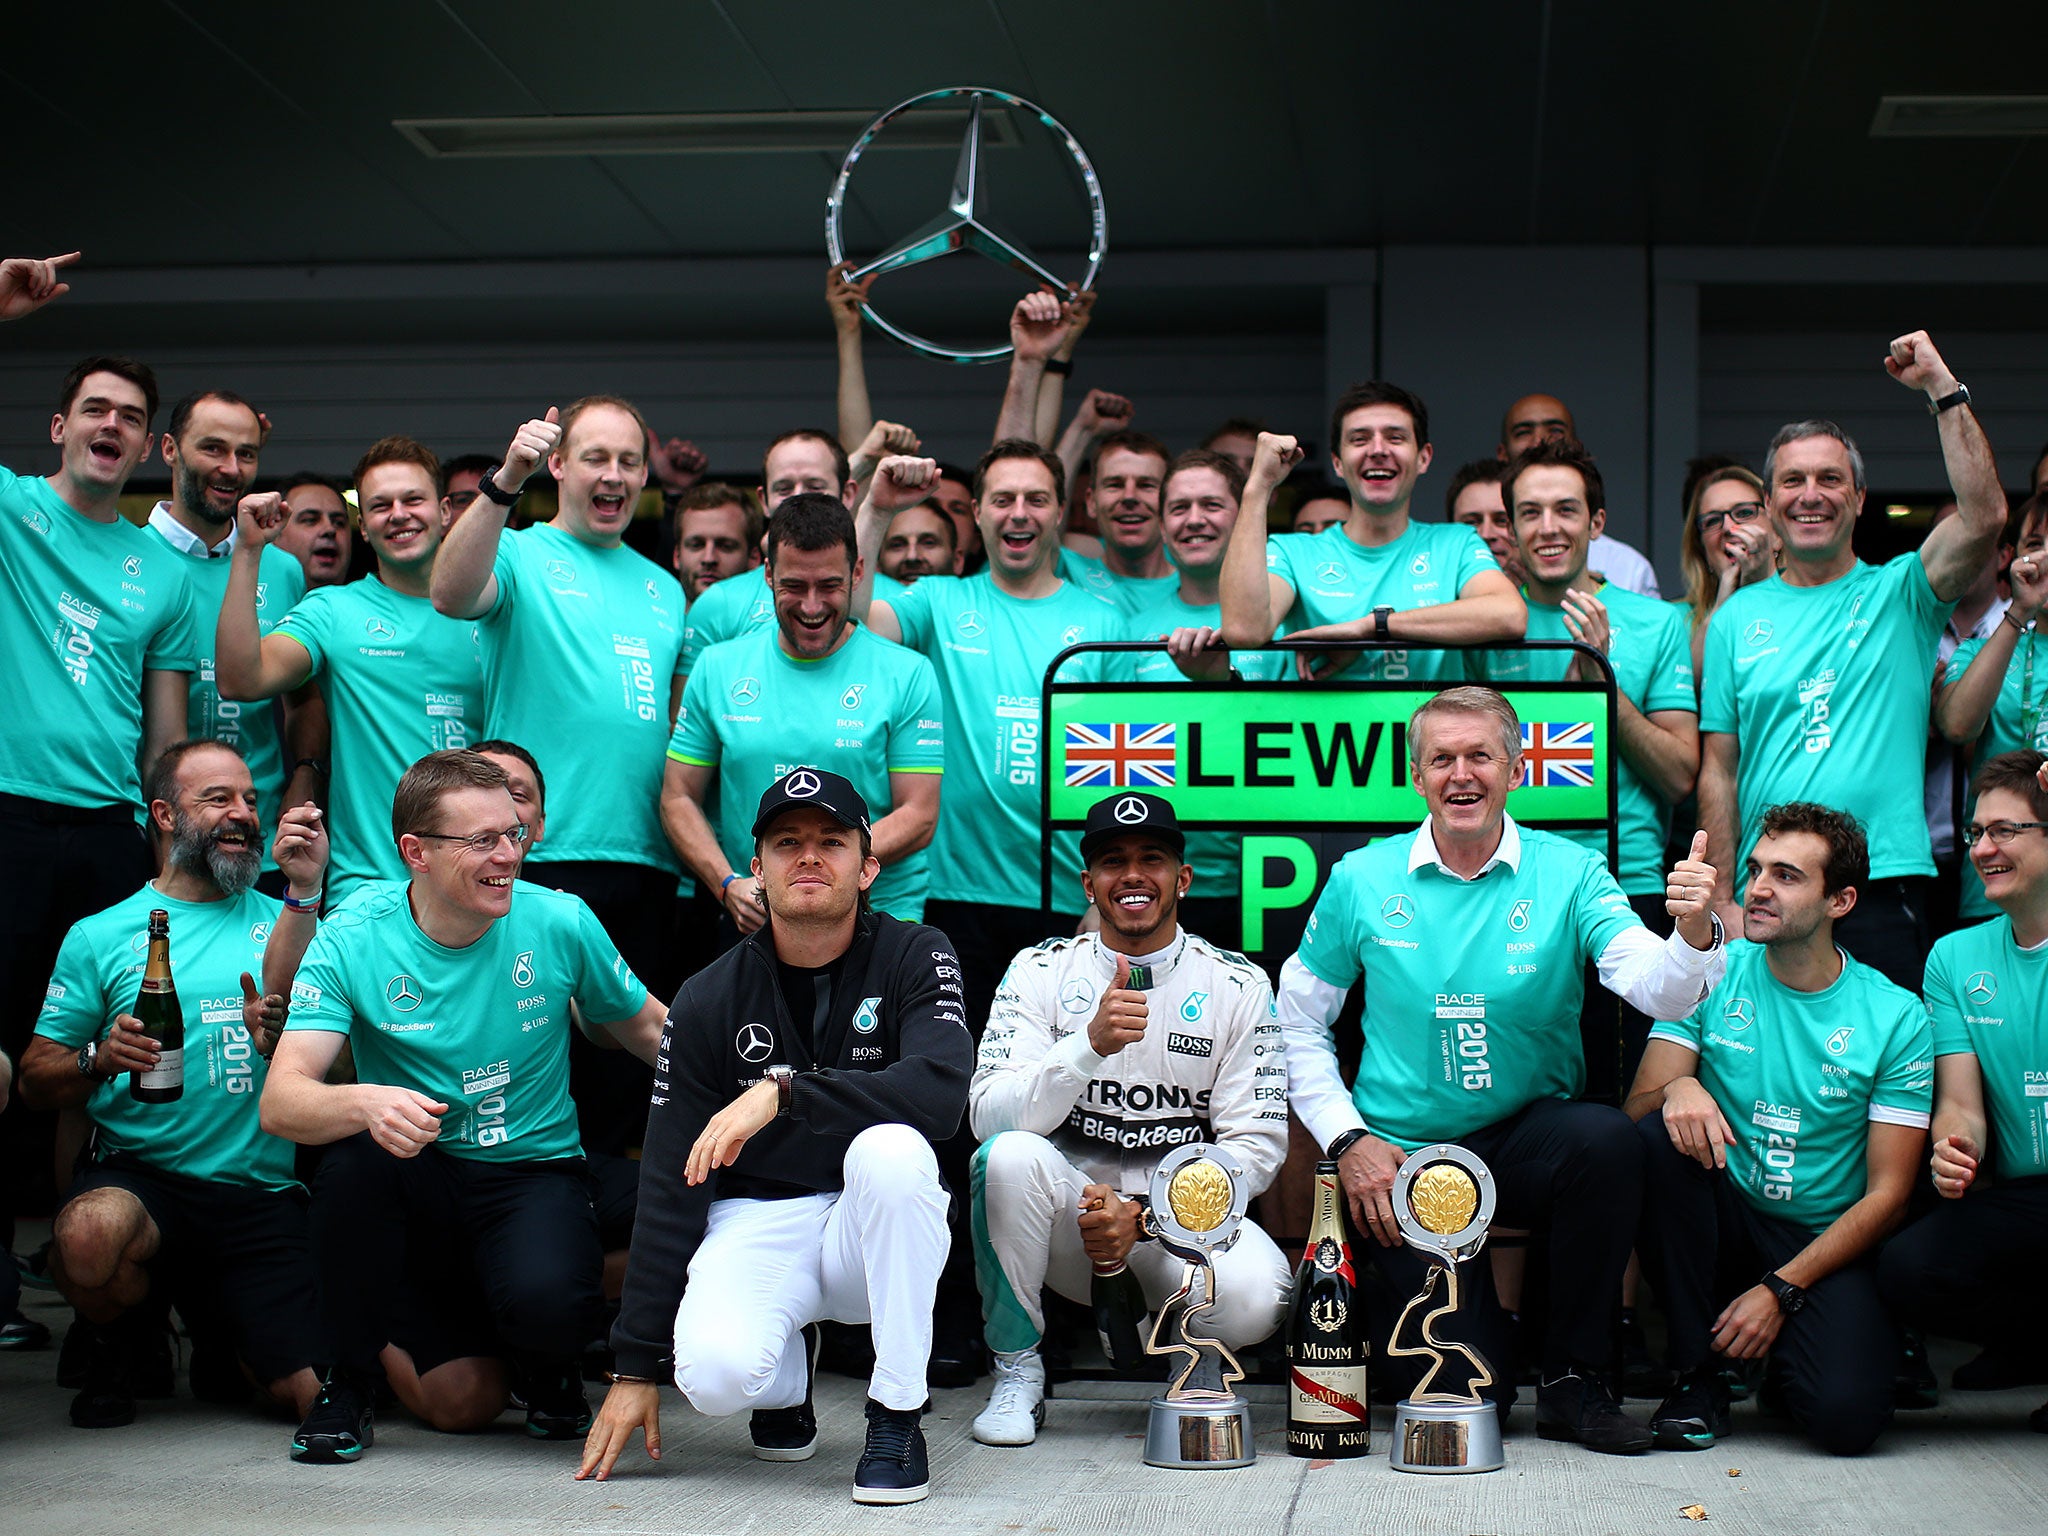 Mercedes celebrate after Lewis Hamilton wins the Russian Grand Prix